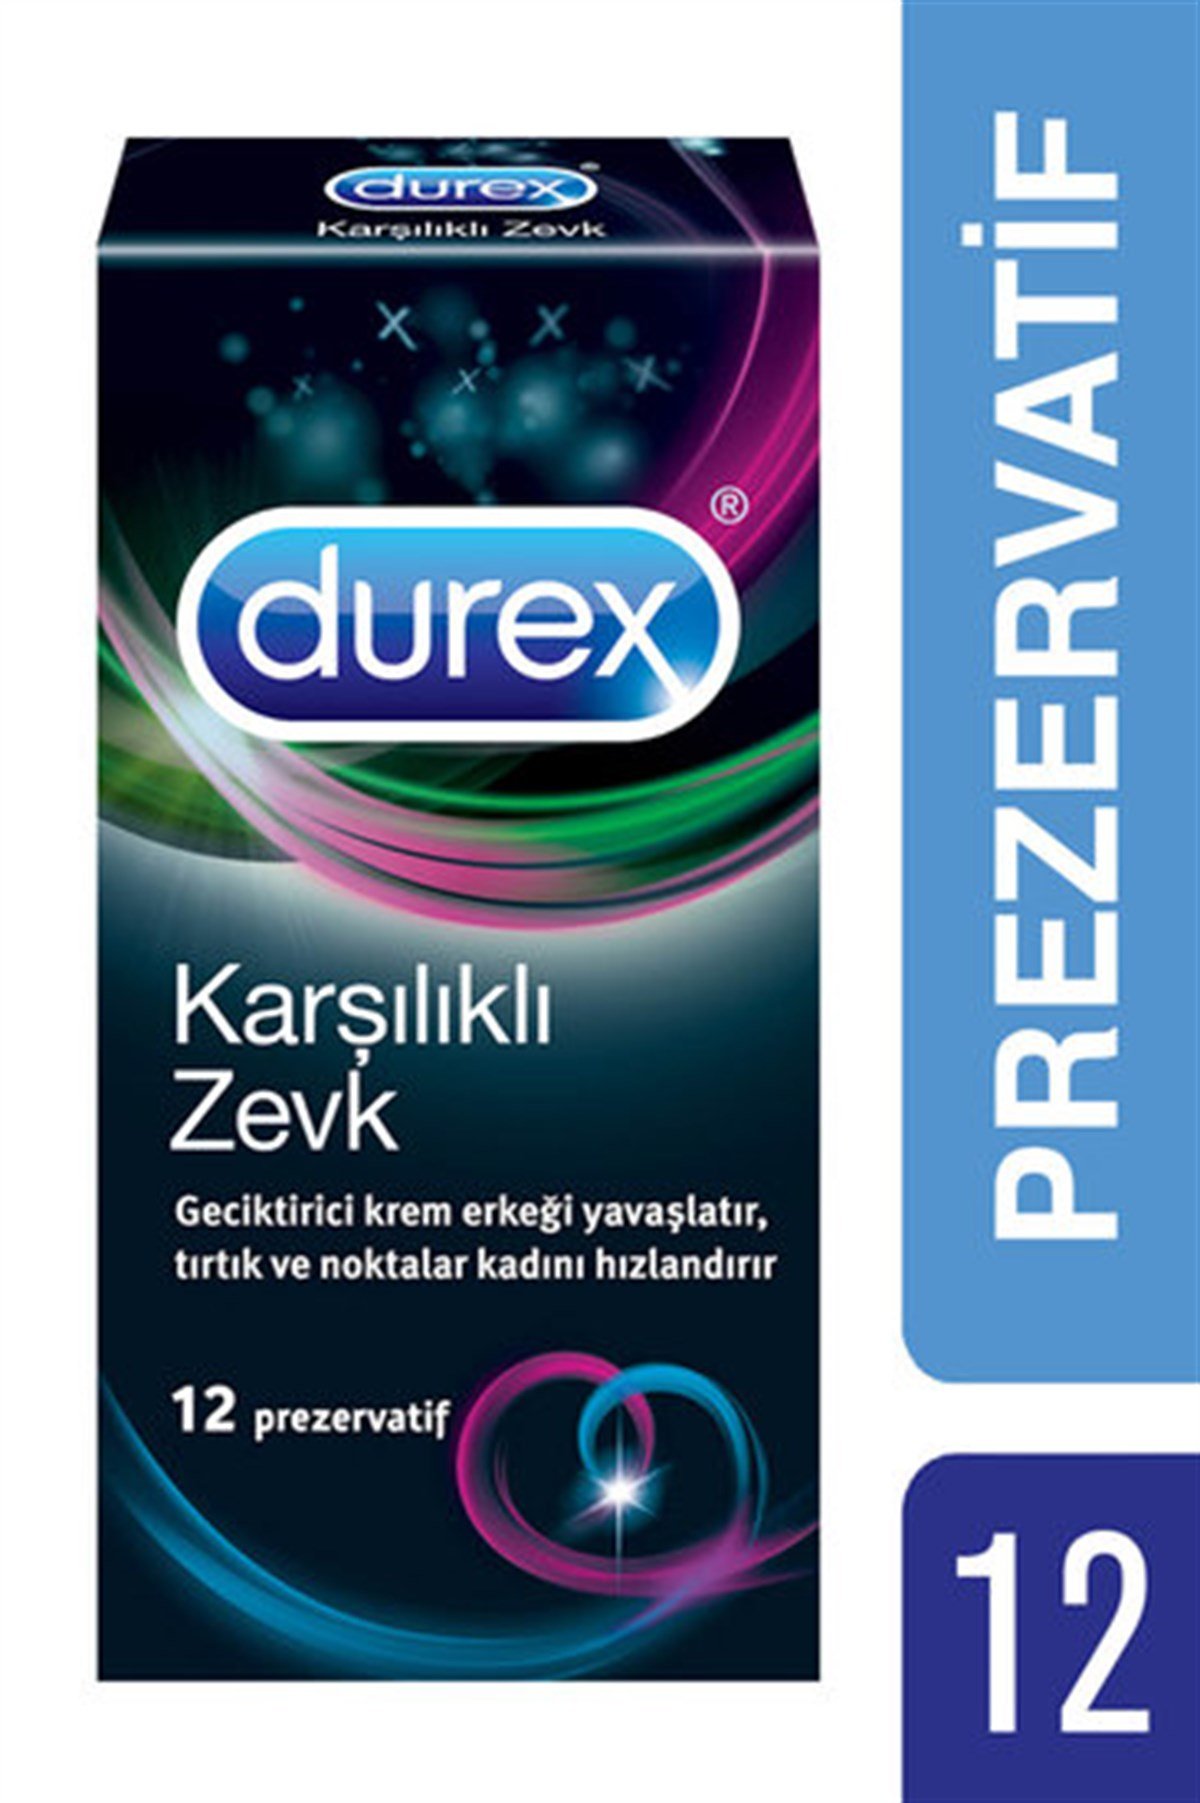 Durex Karşılıklı Zevk Prezervatif 12 li | Ehersey.com